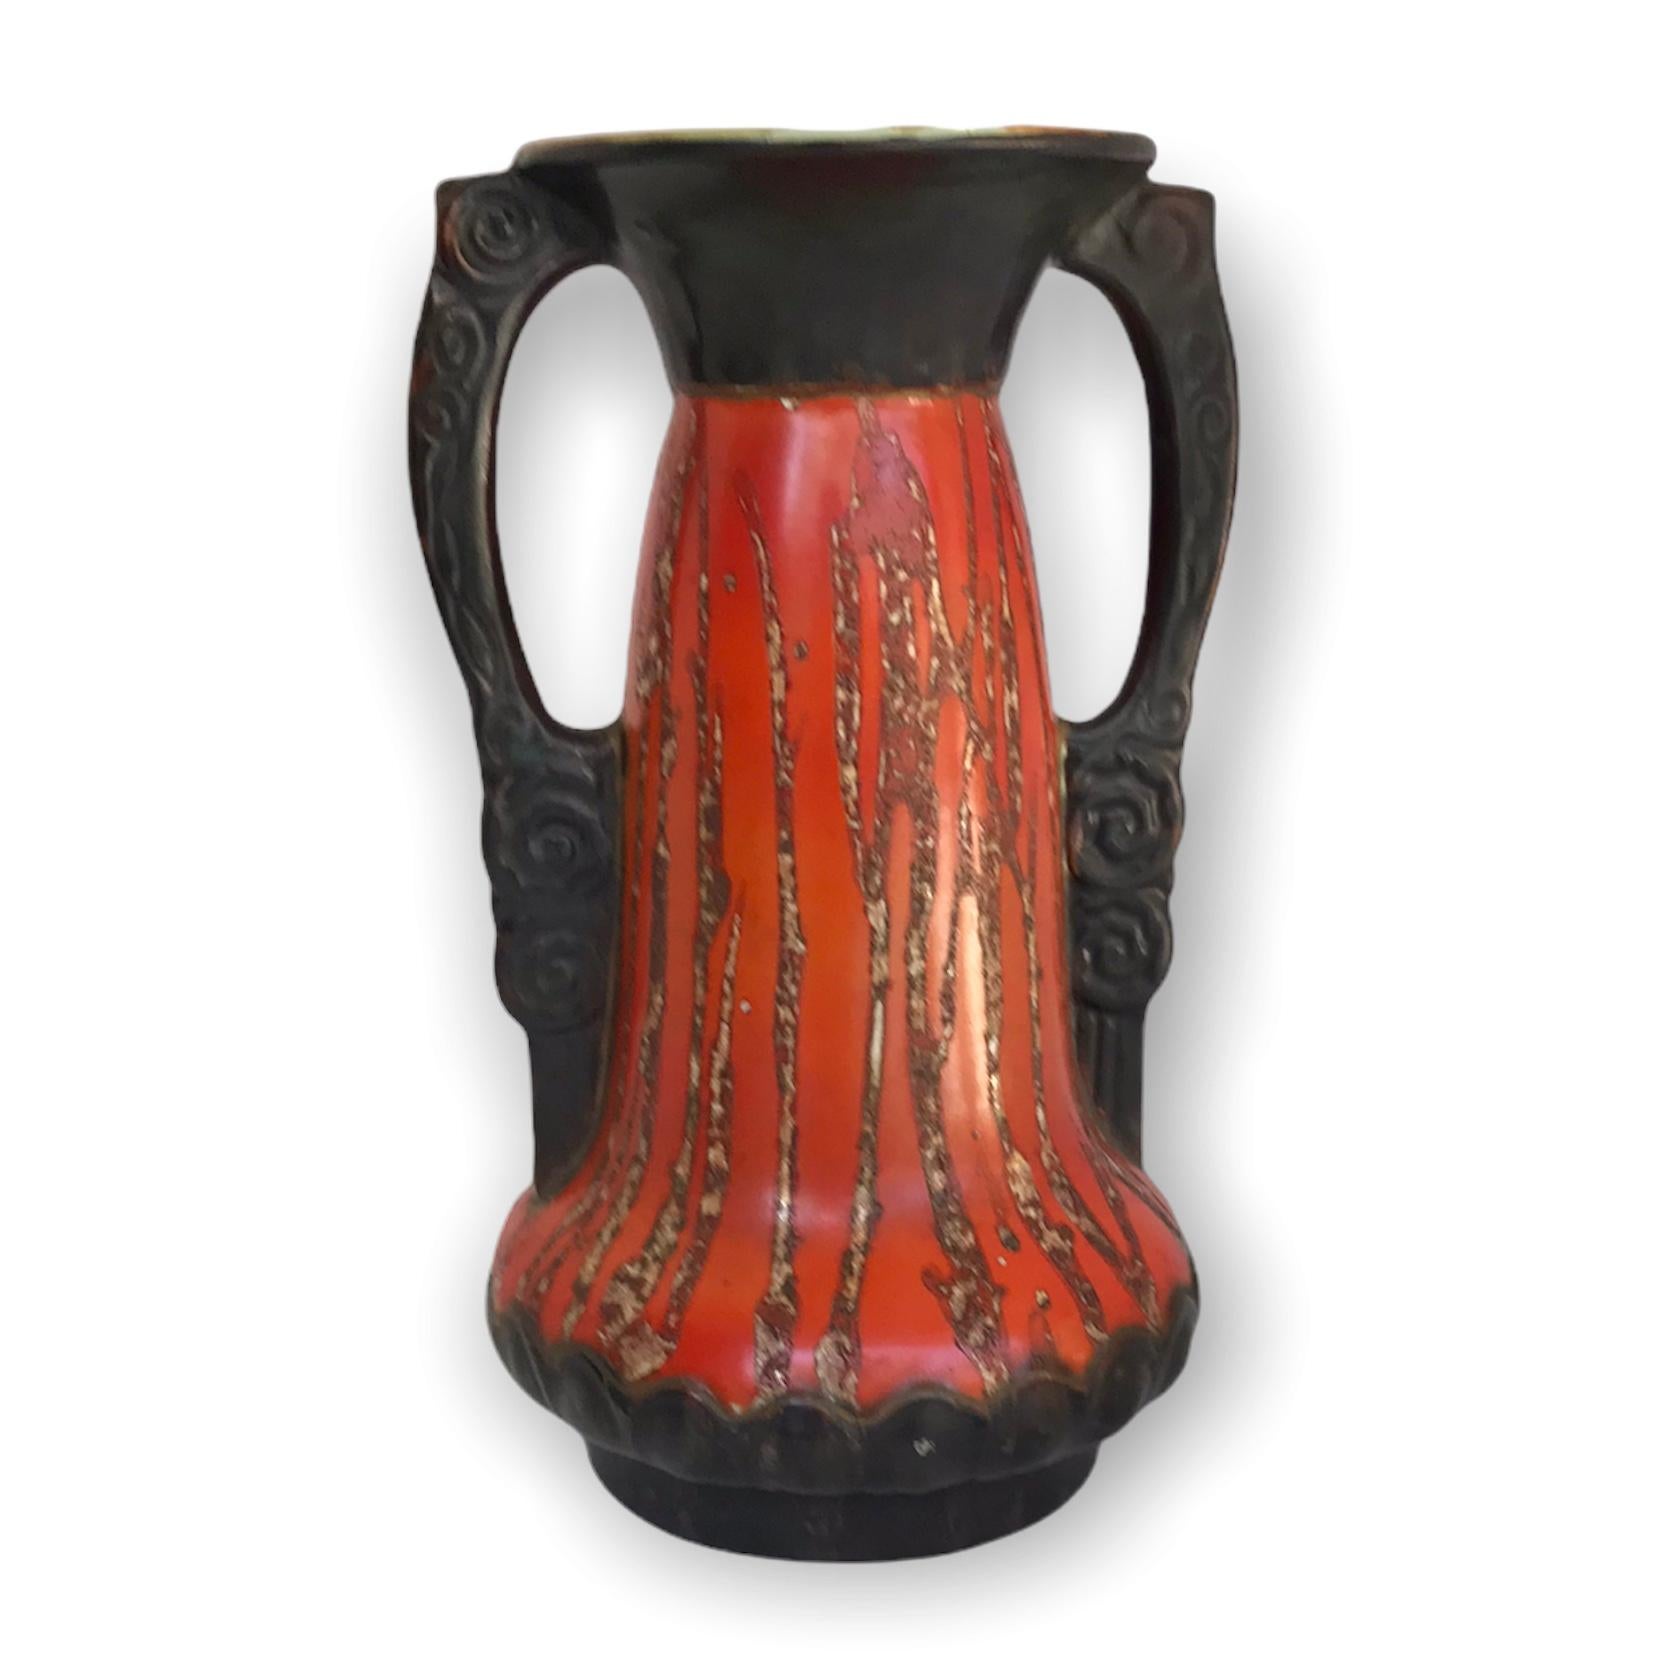 Art Nouveau Modern Czechoslovakian Red & Black Ceramic Vase with Handles, 1930s For Sale 7